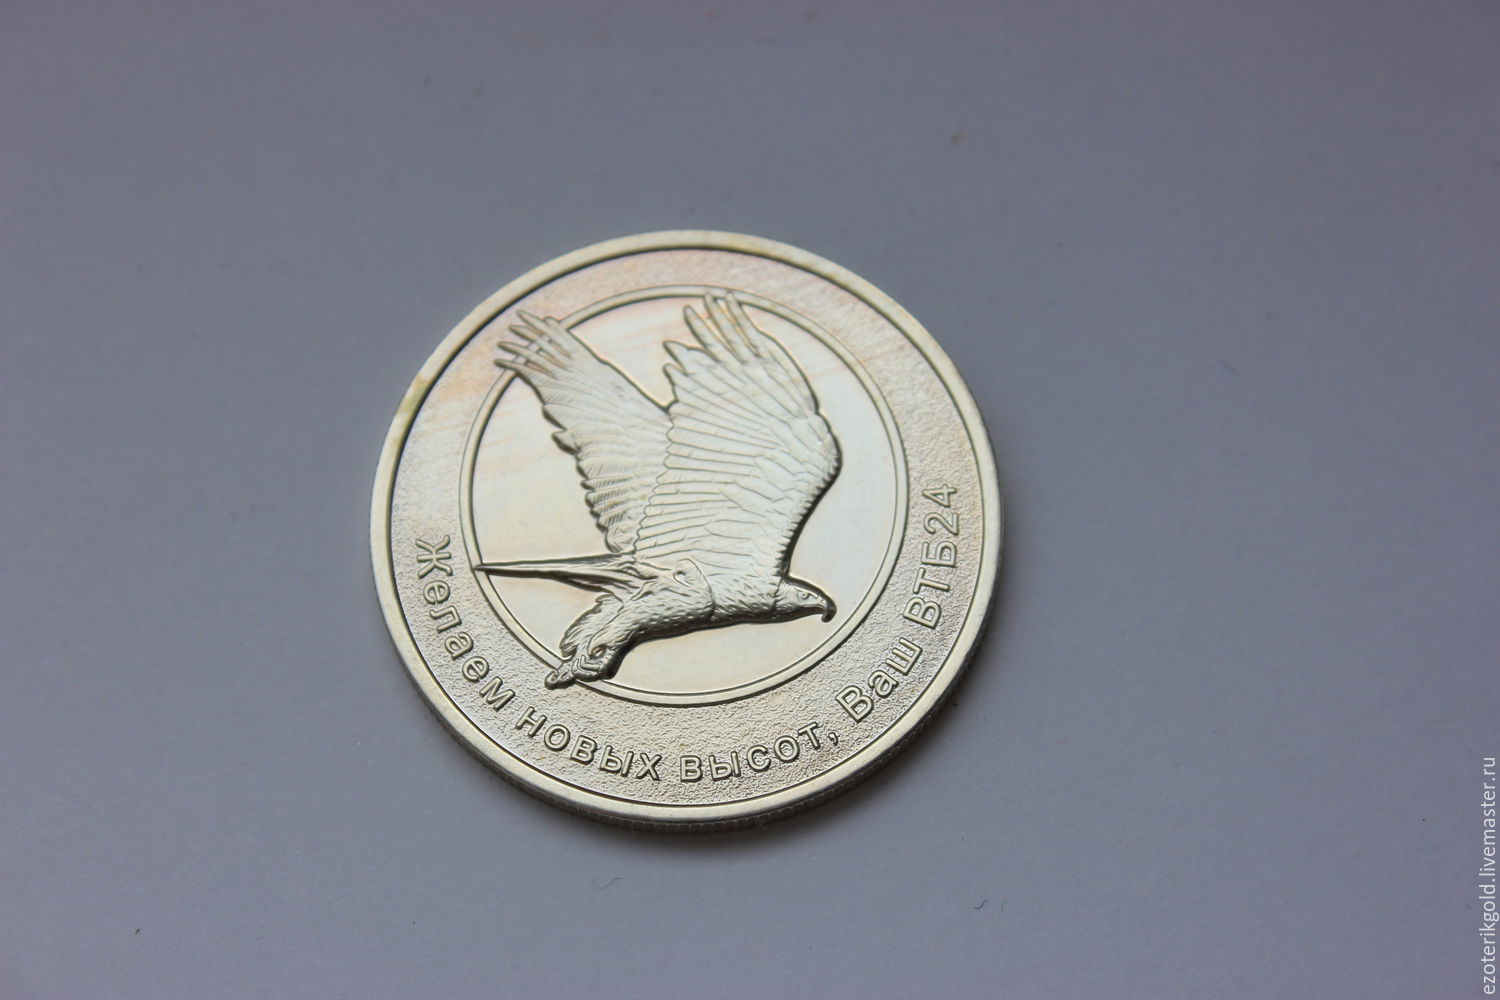 Медаль для банка ВТБ "Орел"